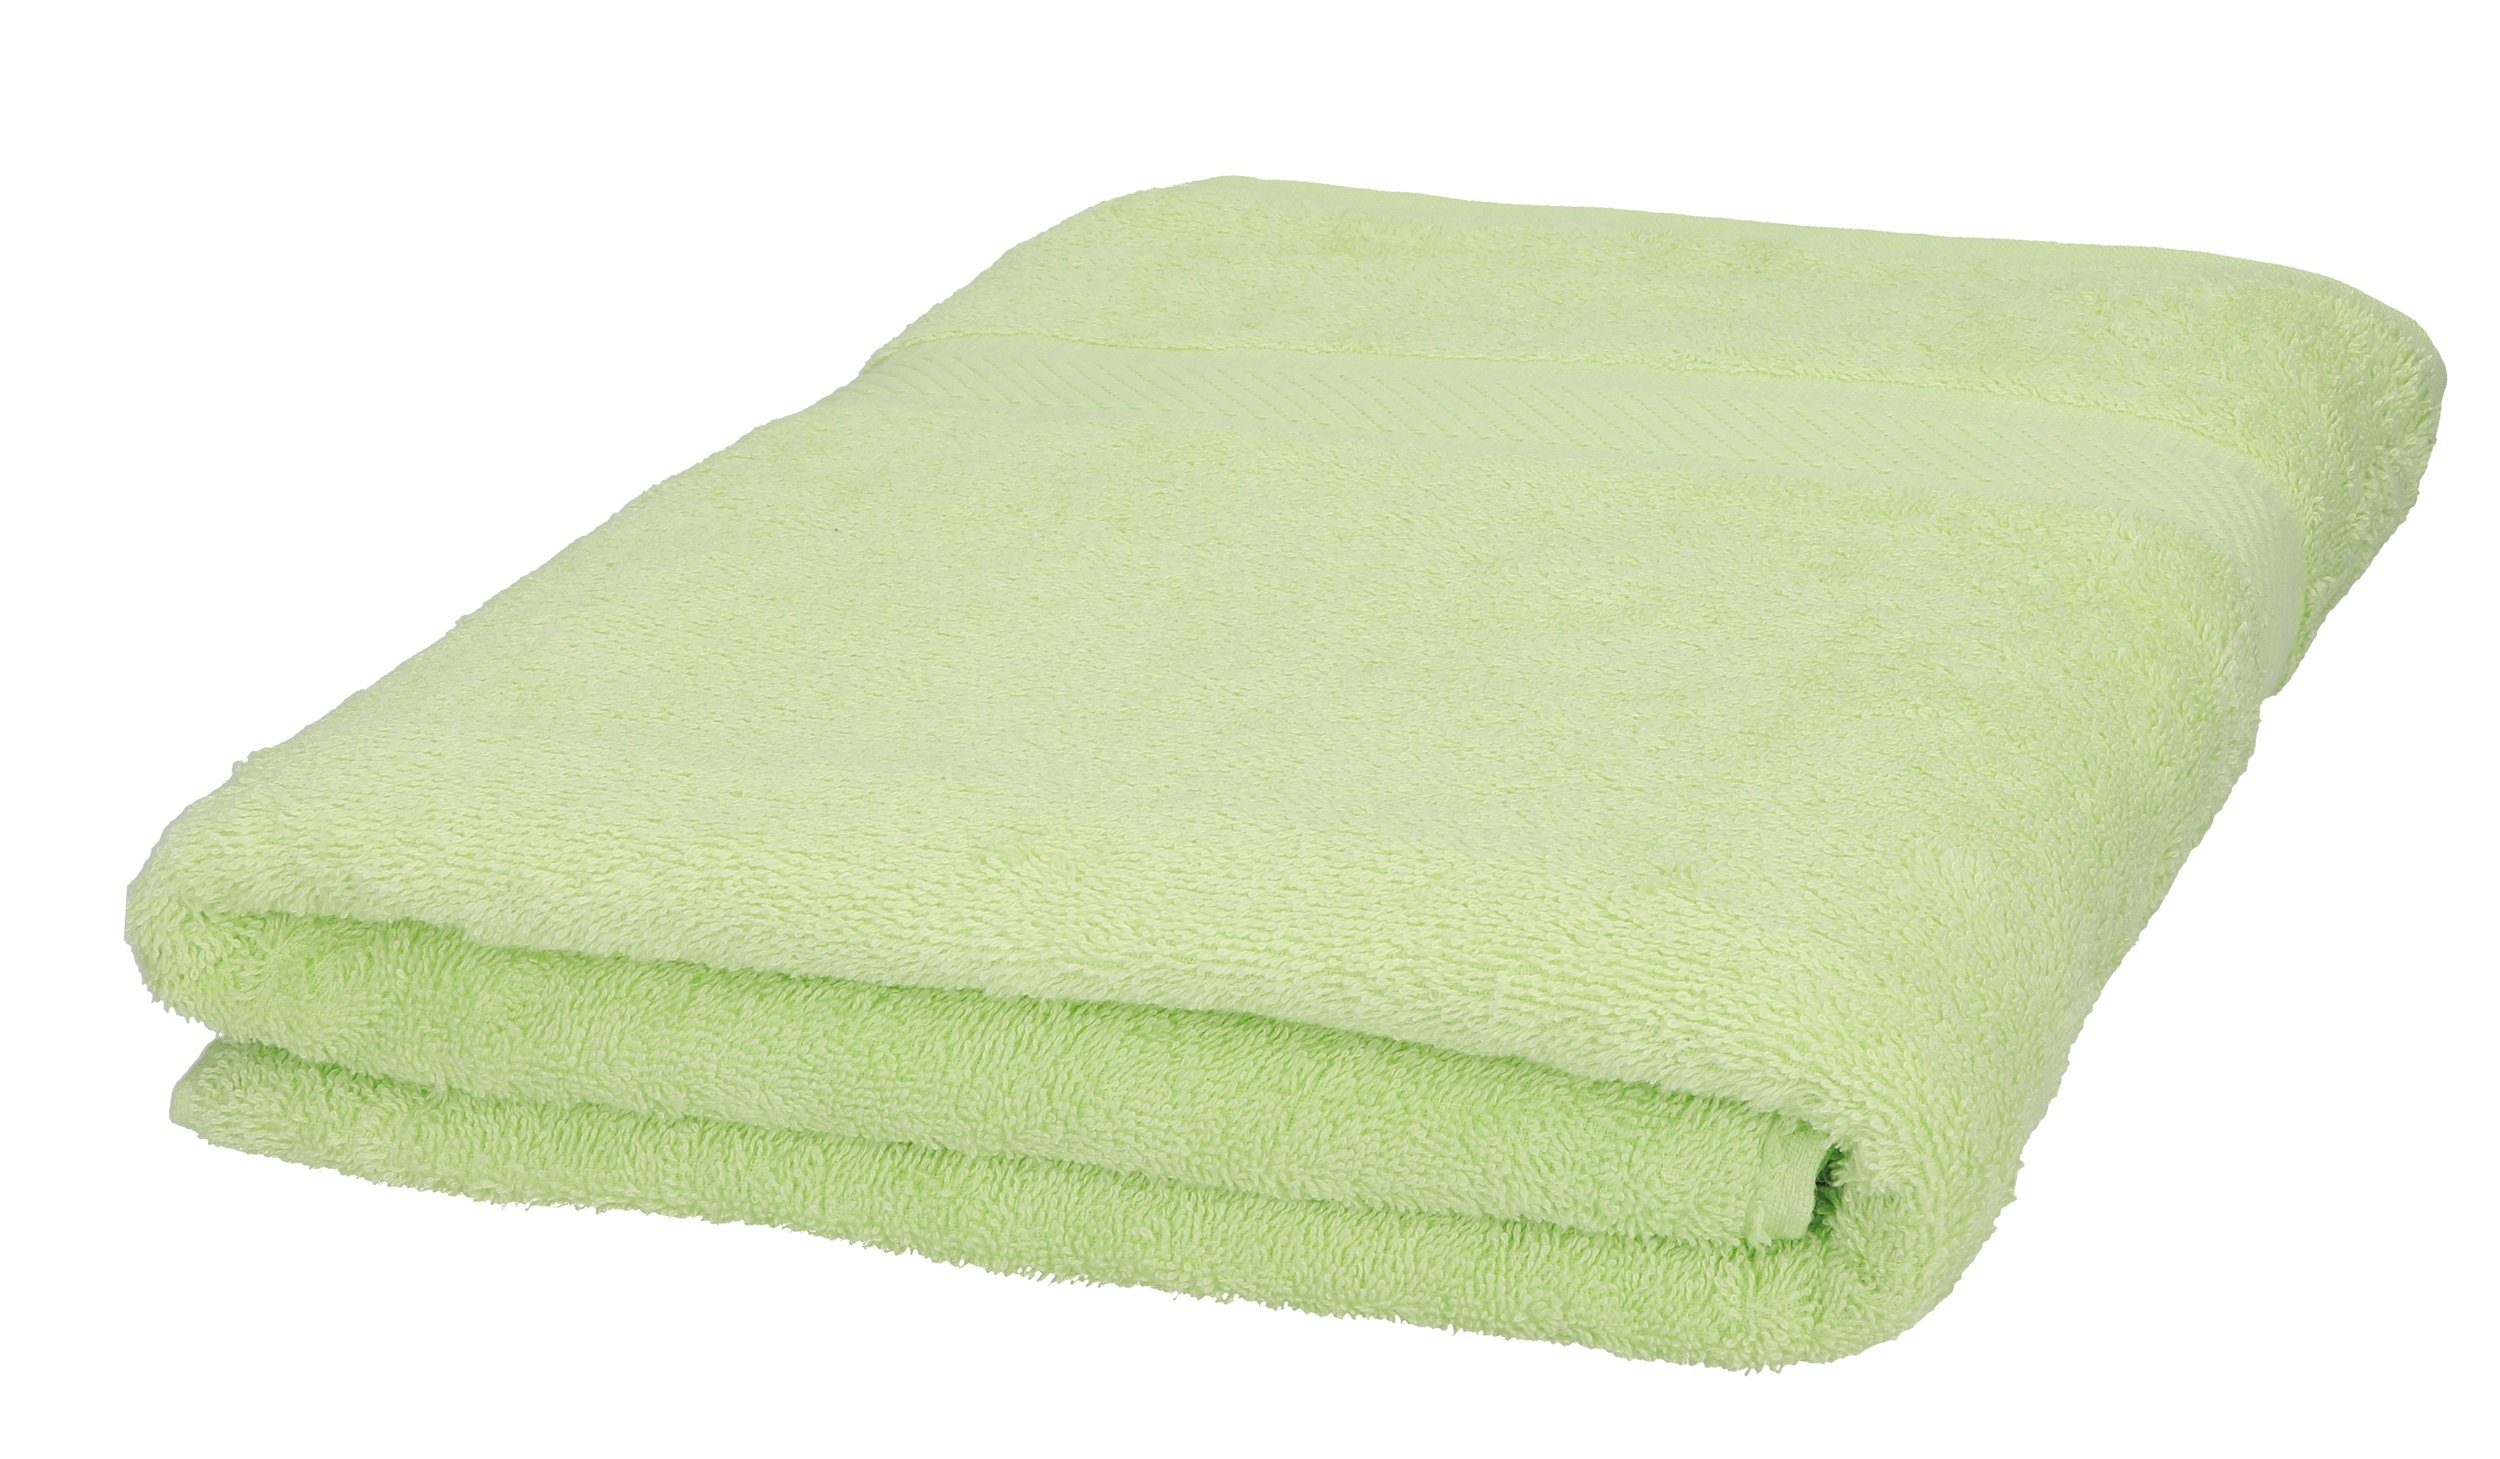 x (6-St) 100% Betz Badetücher Grün, Farbe PALERMO Stück cm 100 6 Baumwolle Badetücher XXL 200